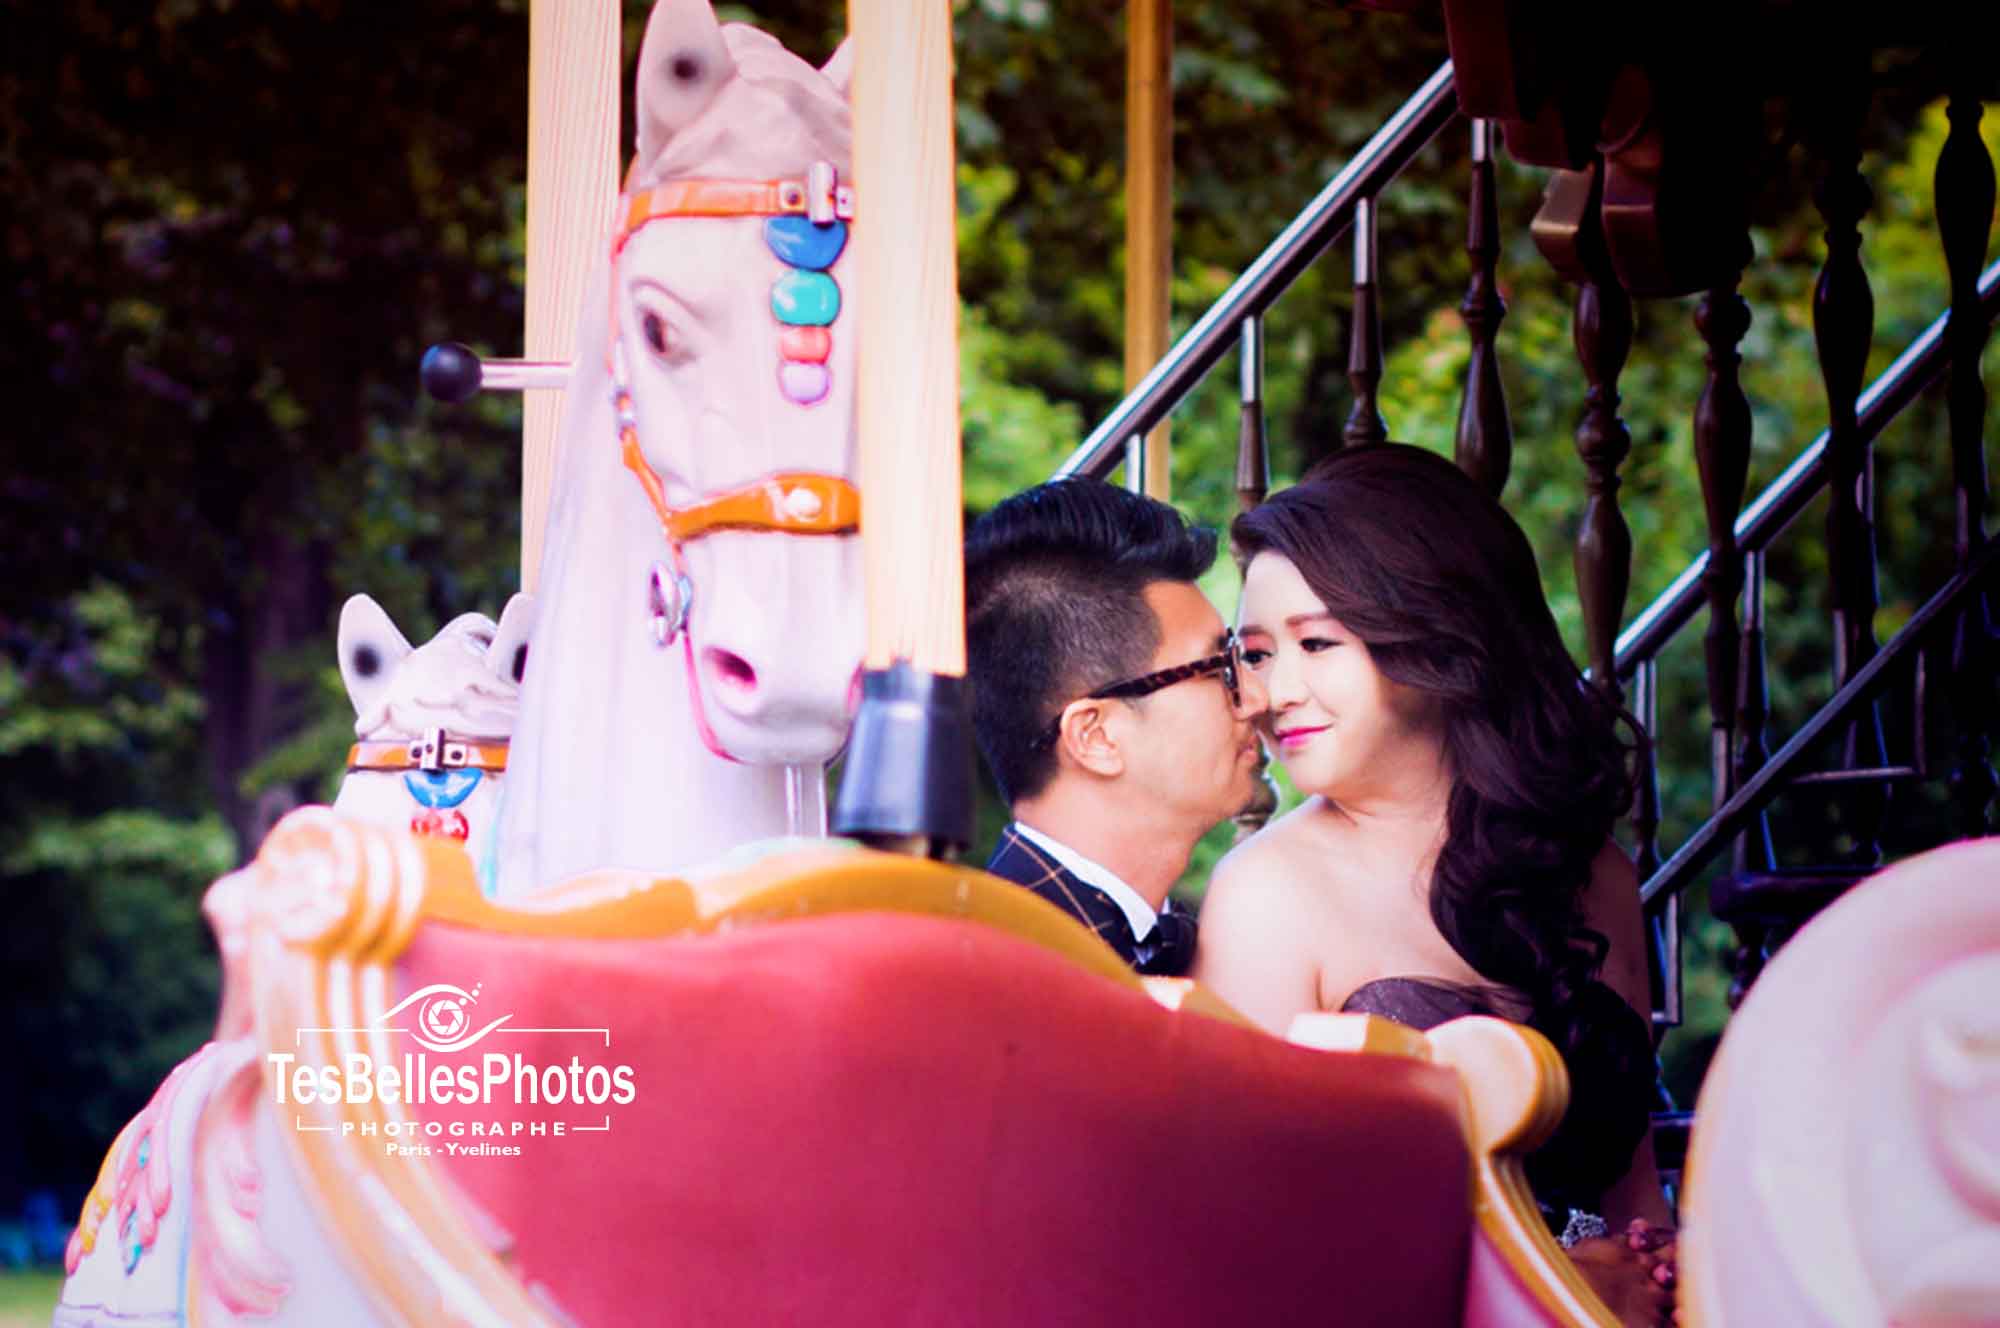 Photographe chinois Côtes-d’Armor, photographe de mariage chinois, séance photo couple chinois, shooting pre wedding couple chinese Côtes-d’Armor